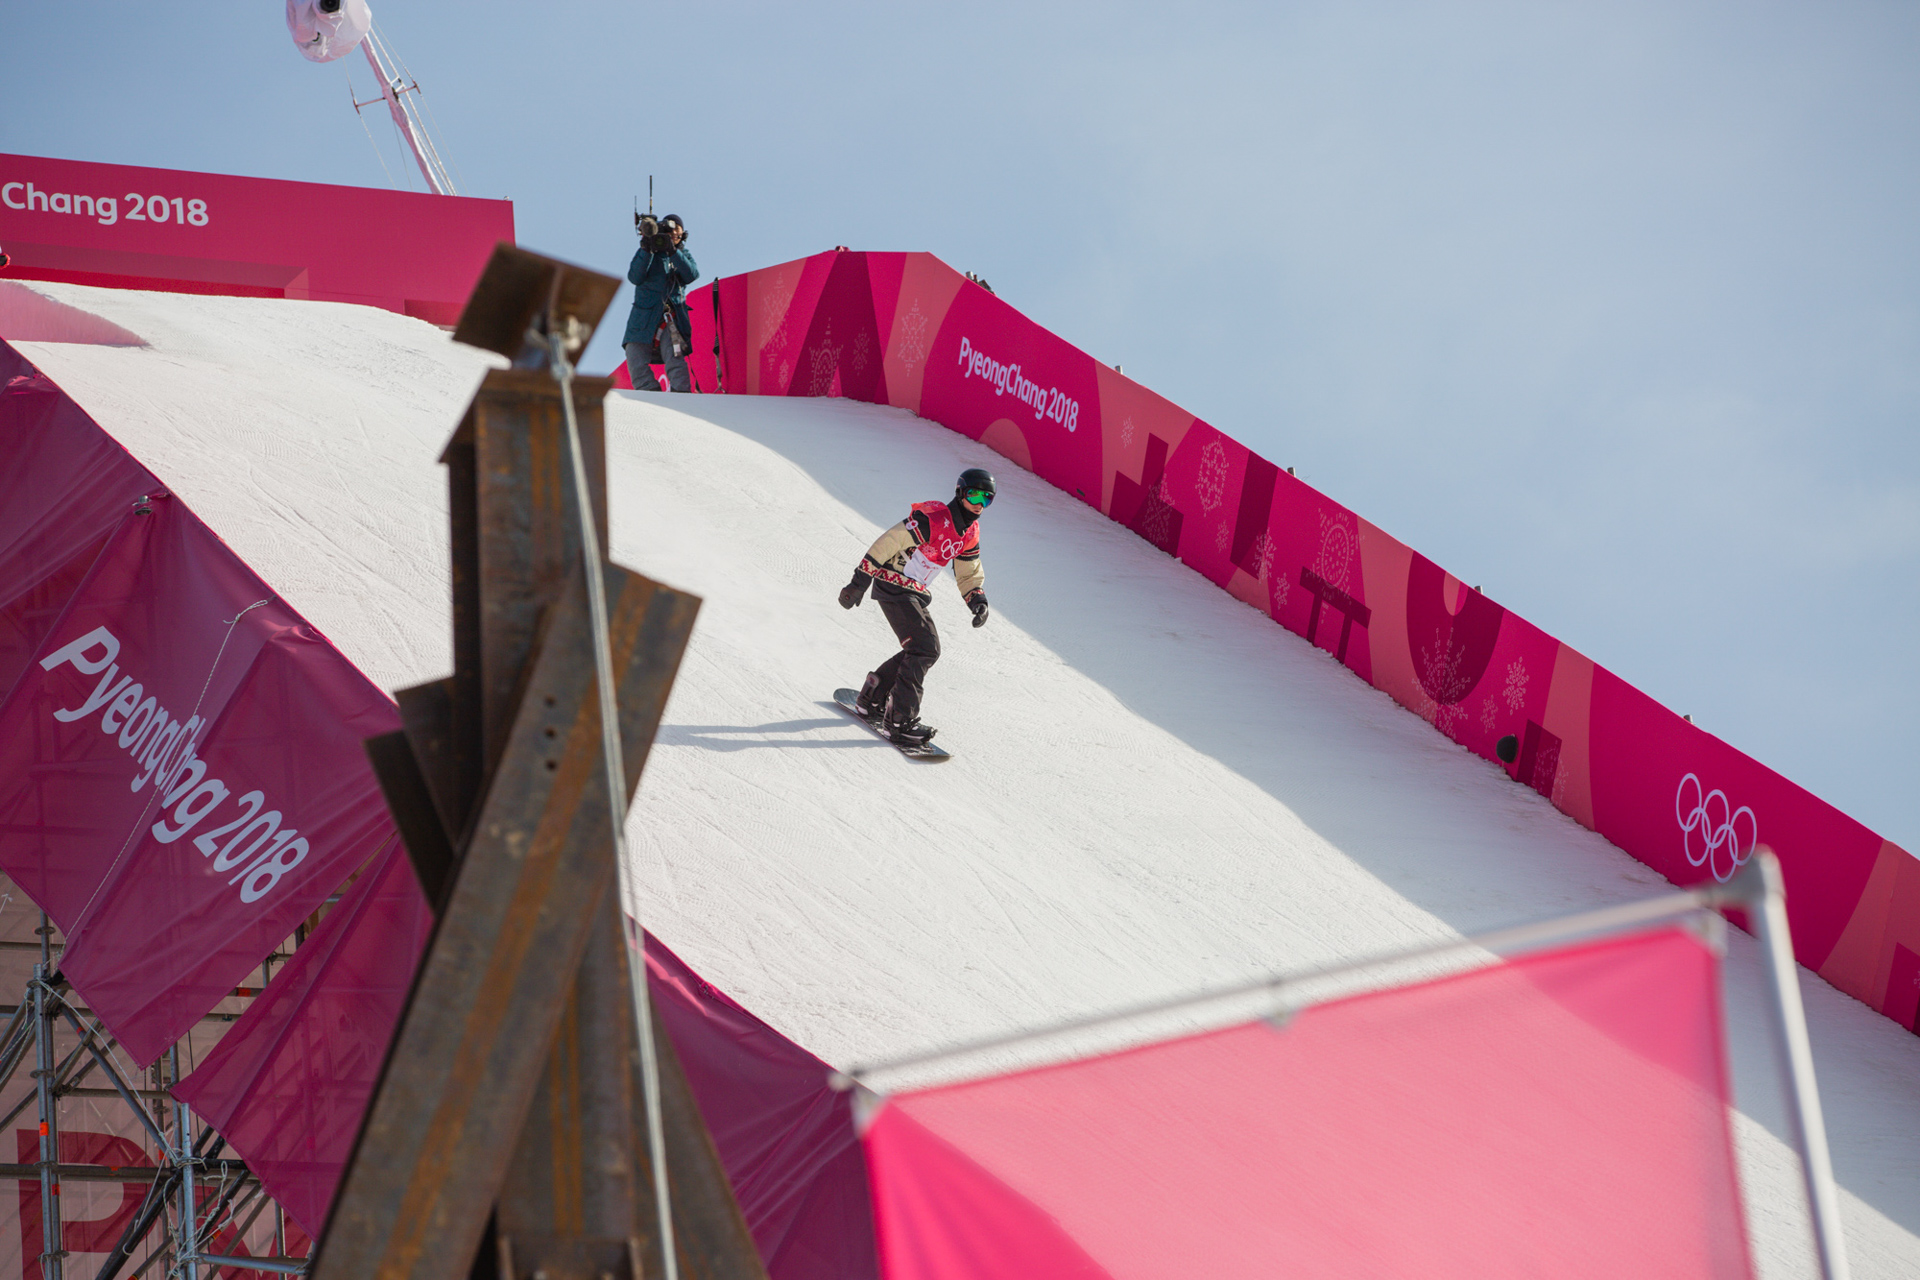 Max Parrot Snowboard big Air Olympics 2018 Pyeongchang